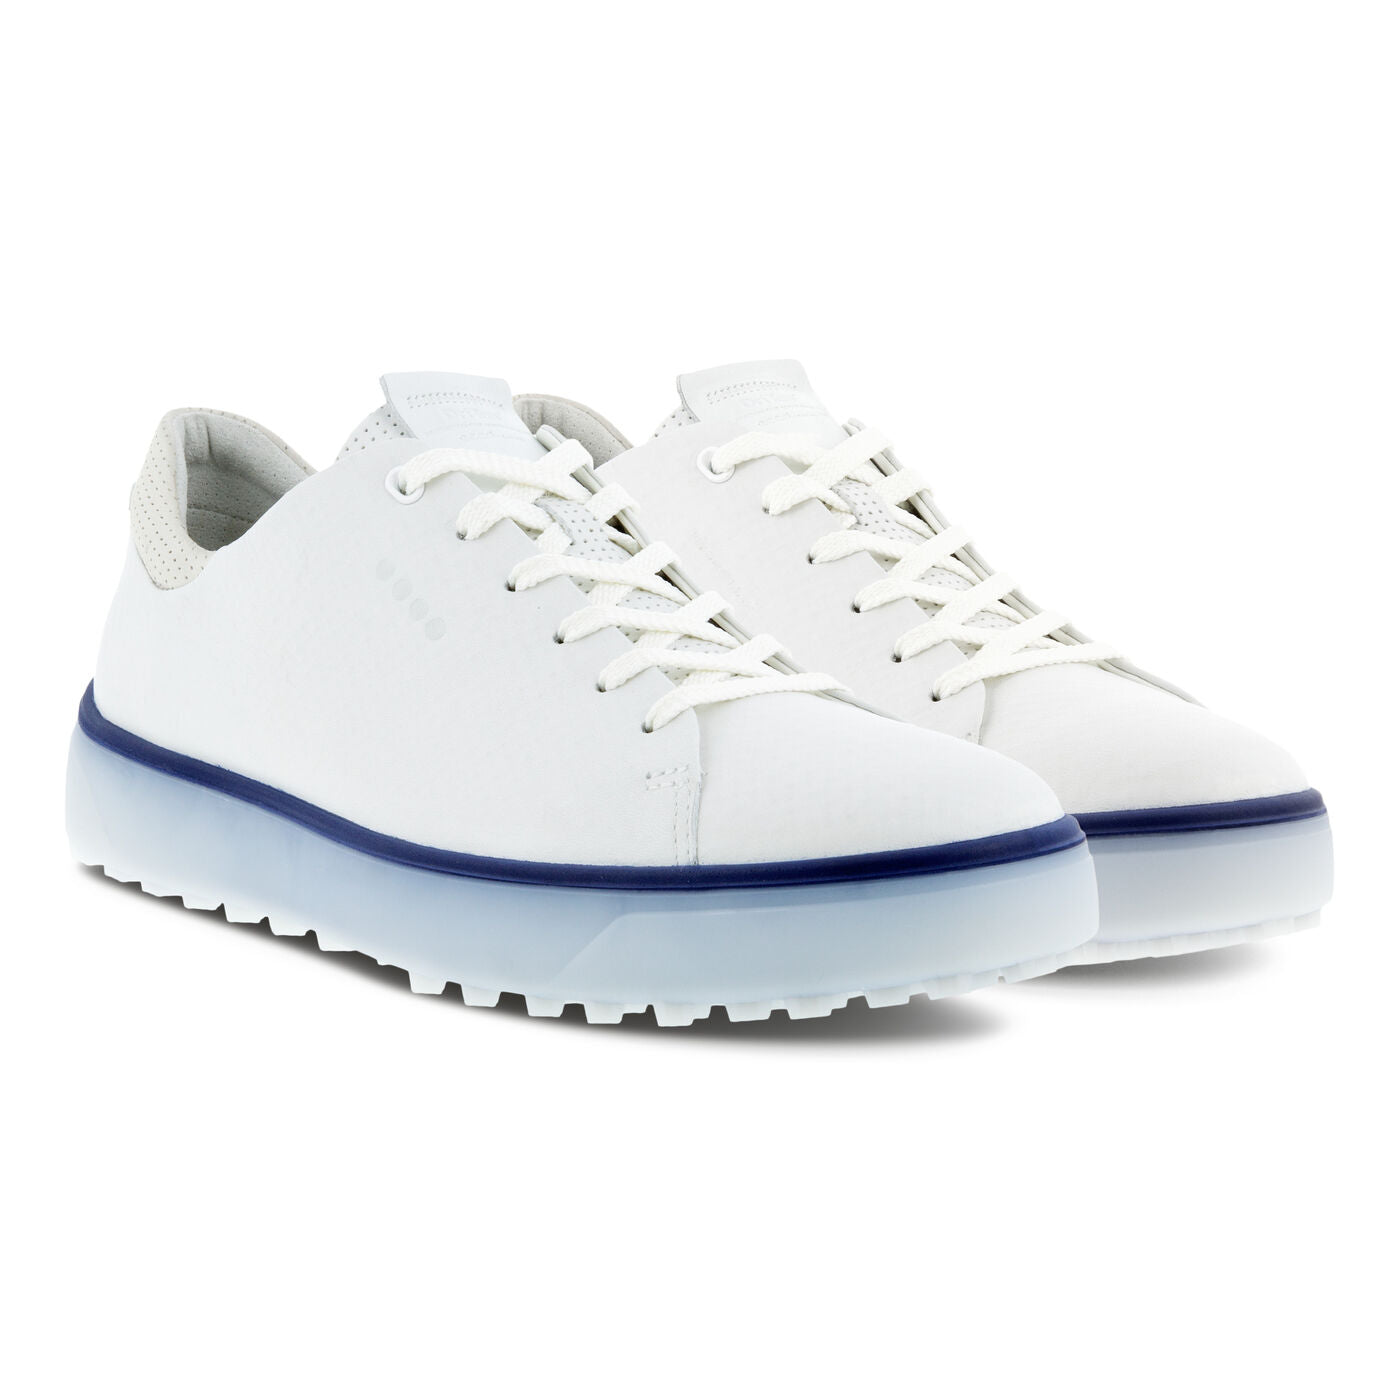 Ecco Tray Golf Shoes 100304